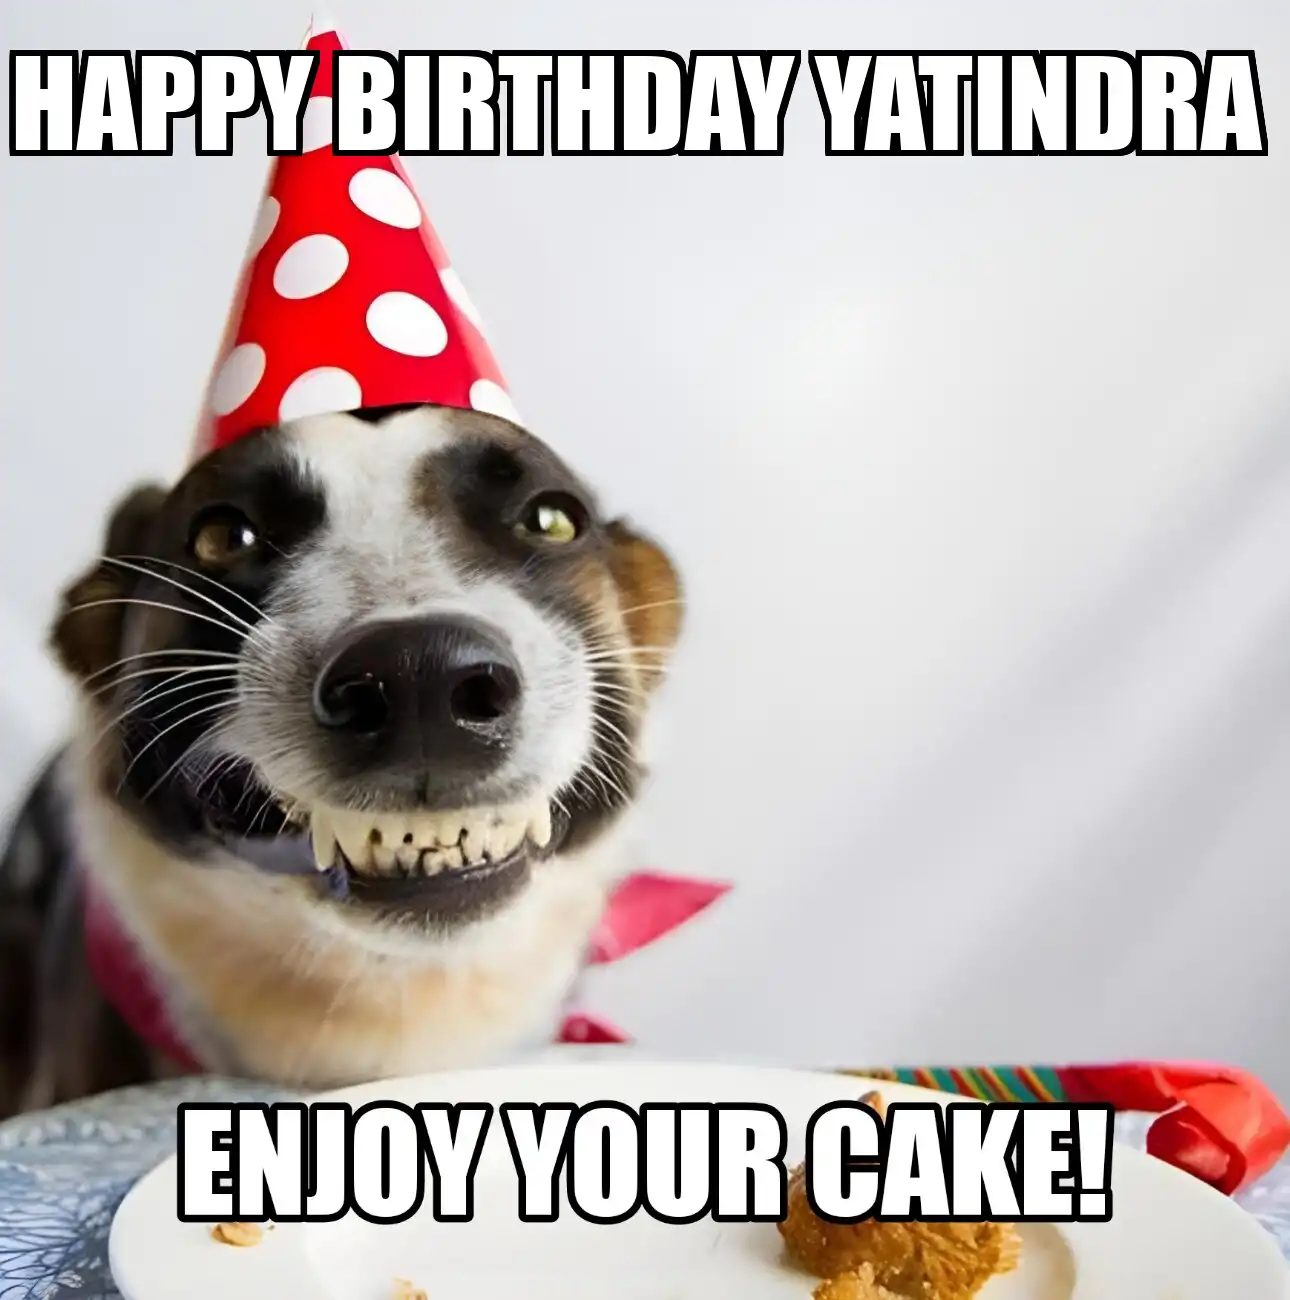 Happy Birthday Yatindra Enjoy Your Cake Dog Meme